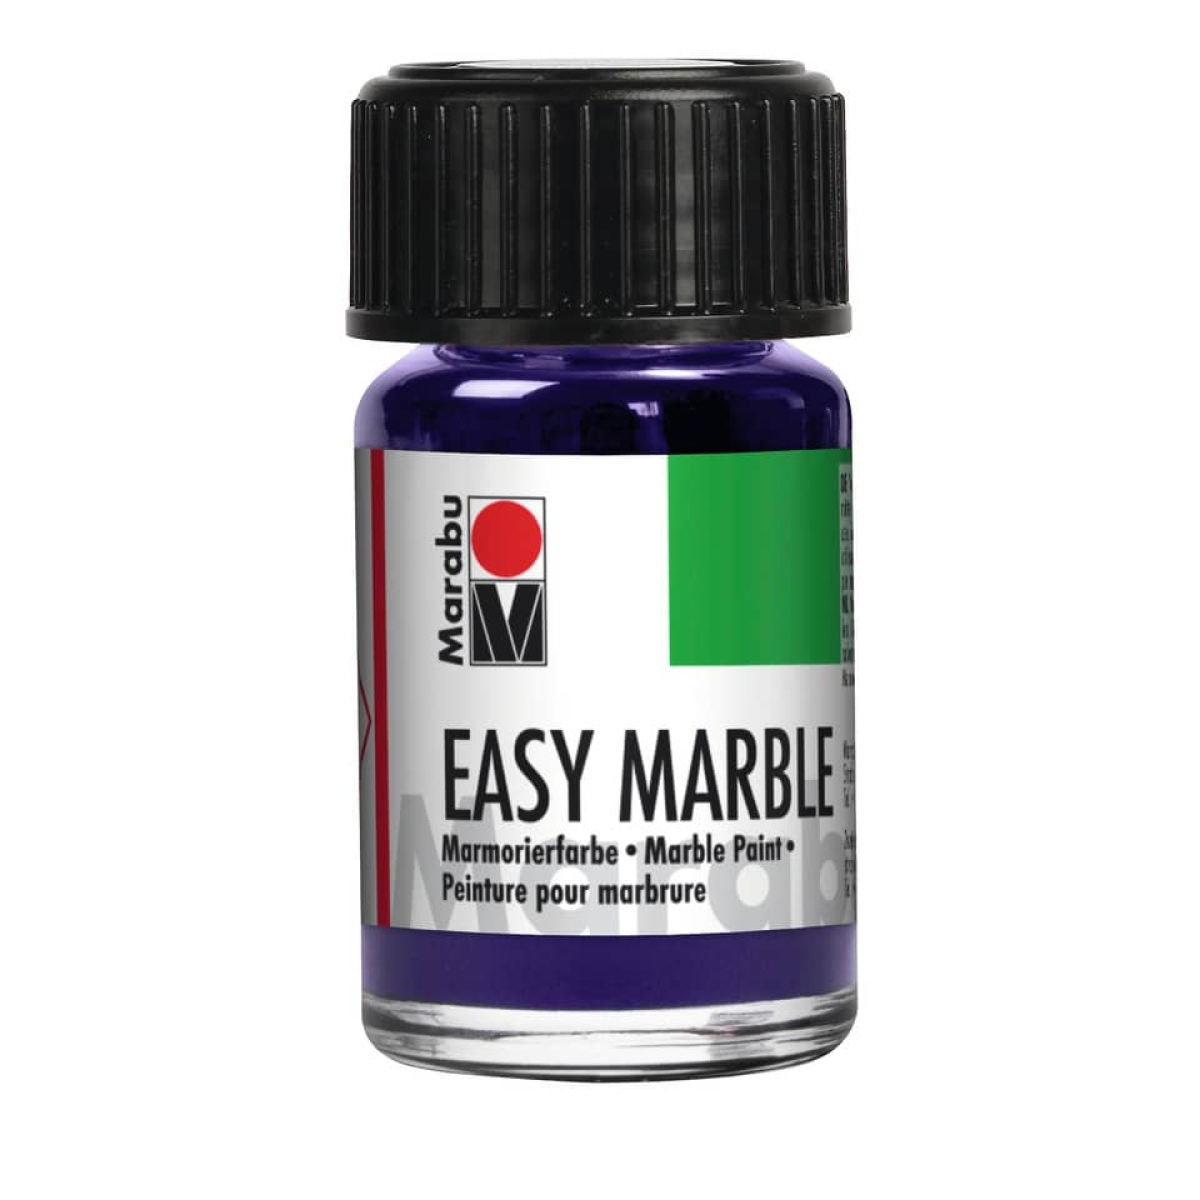 MARABUMarmorierfarbe Easy Marble, 15ml, lavendel 13050 039 007Artikel-Nr: 4007751469564